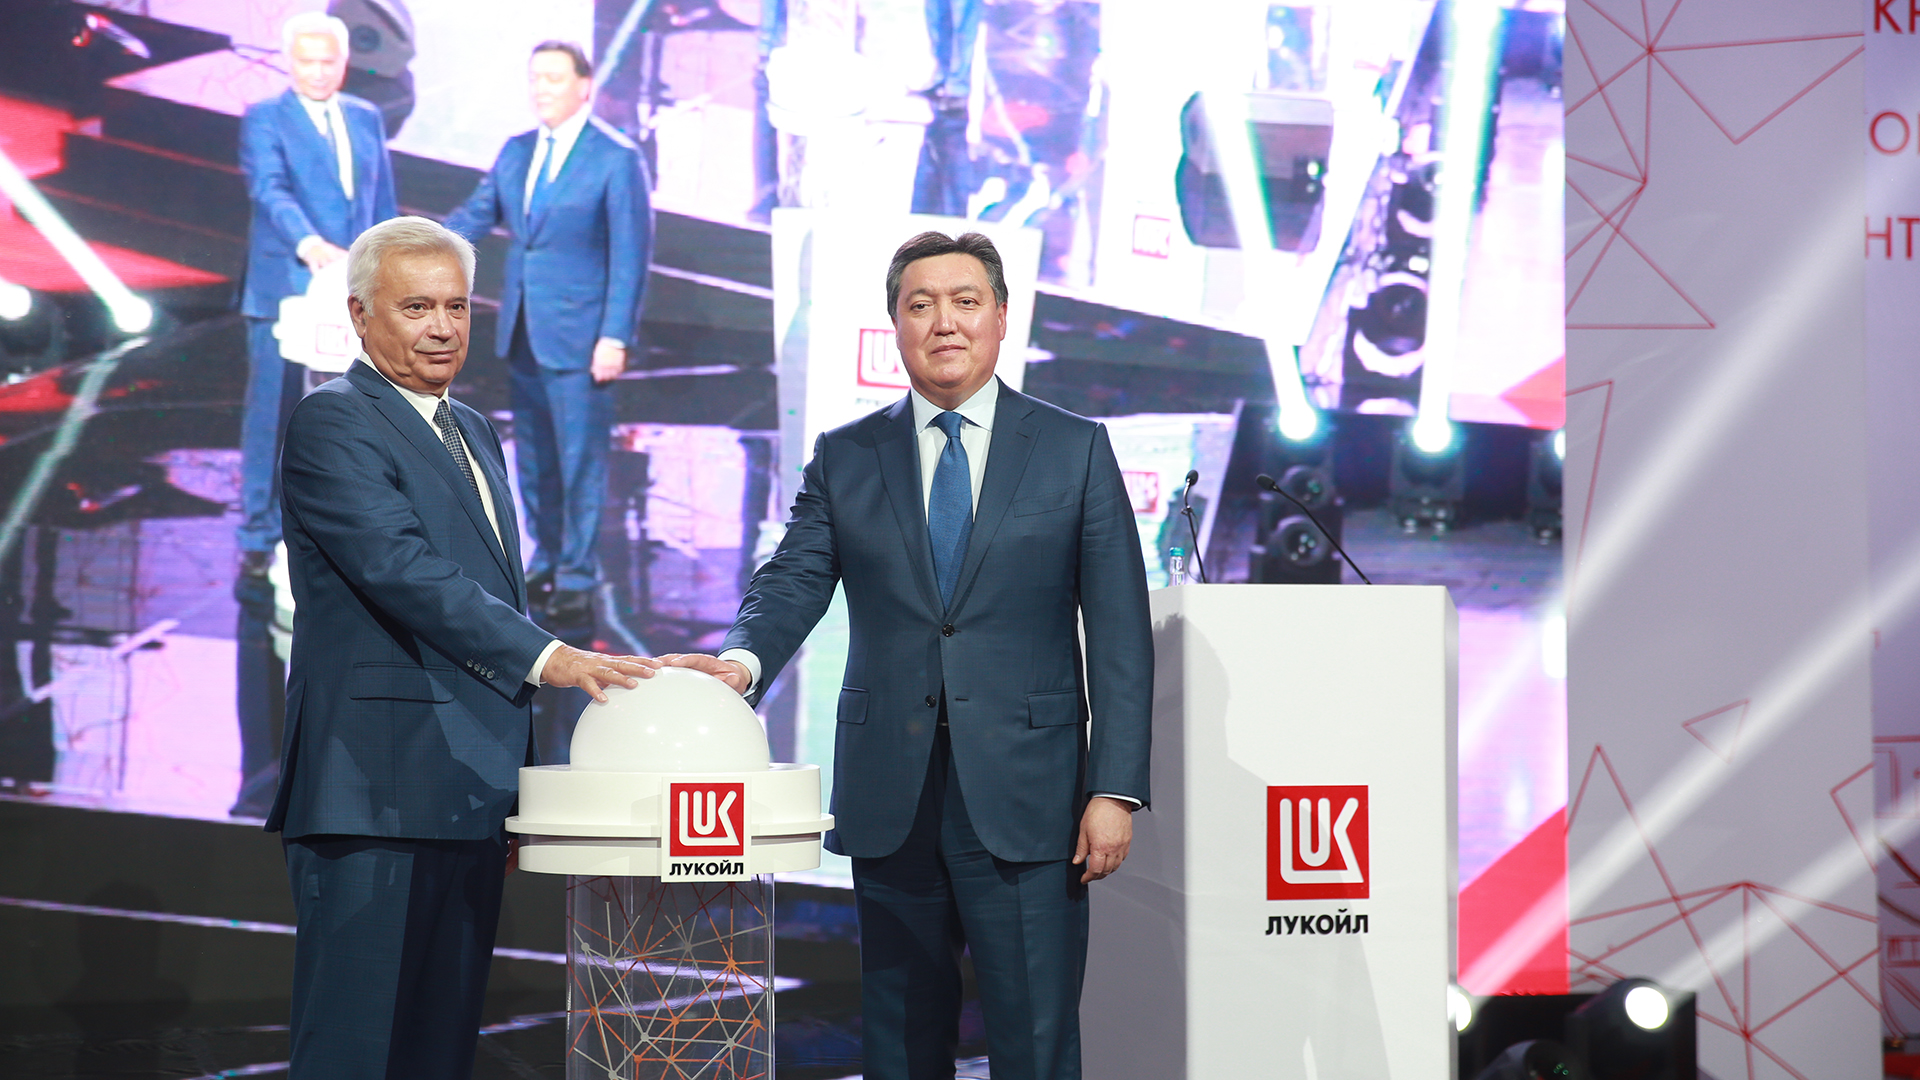 Askar Mamin attends the opening of oil factory in Almaty Region